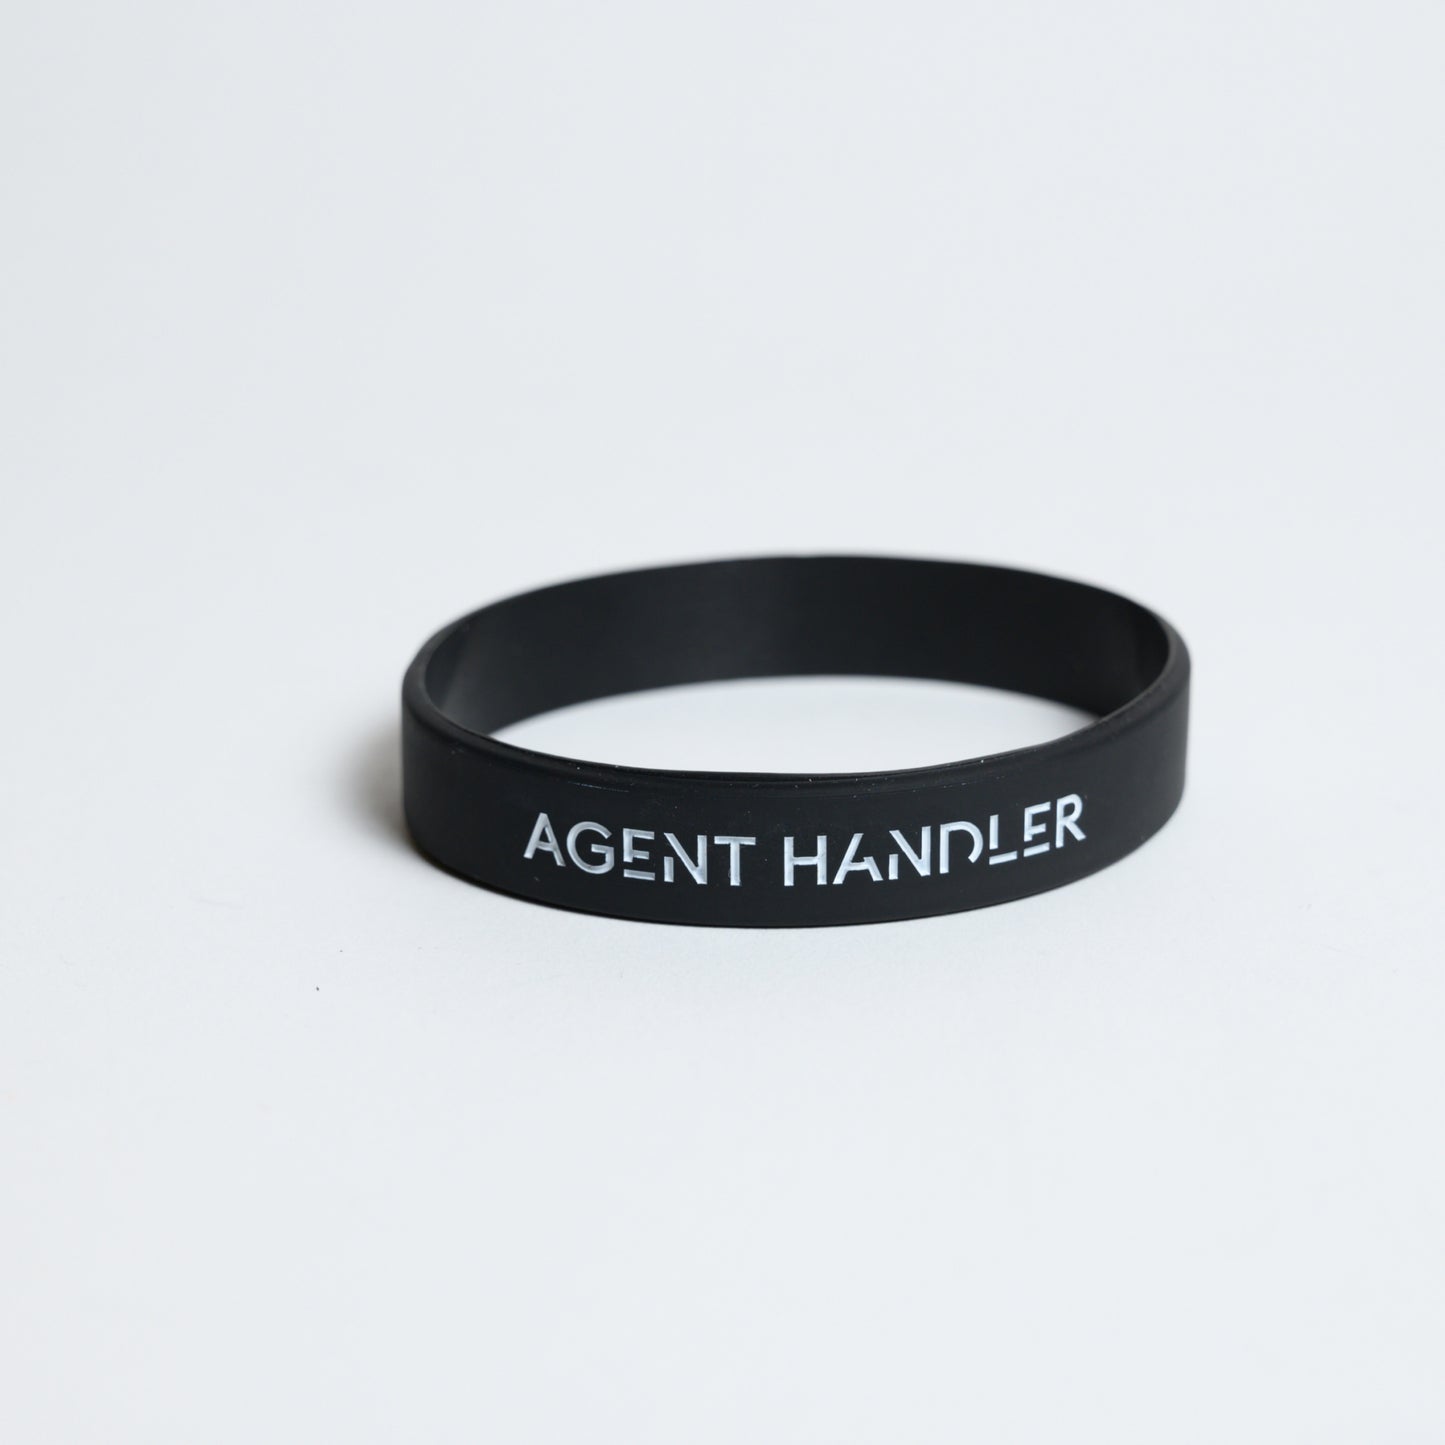 Agent Handler Wristband